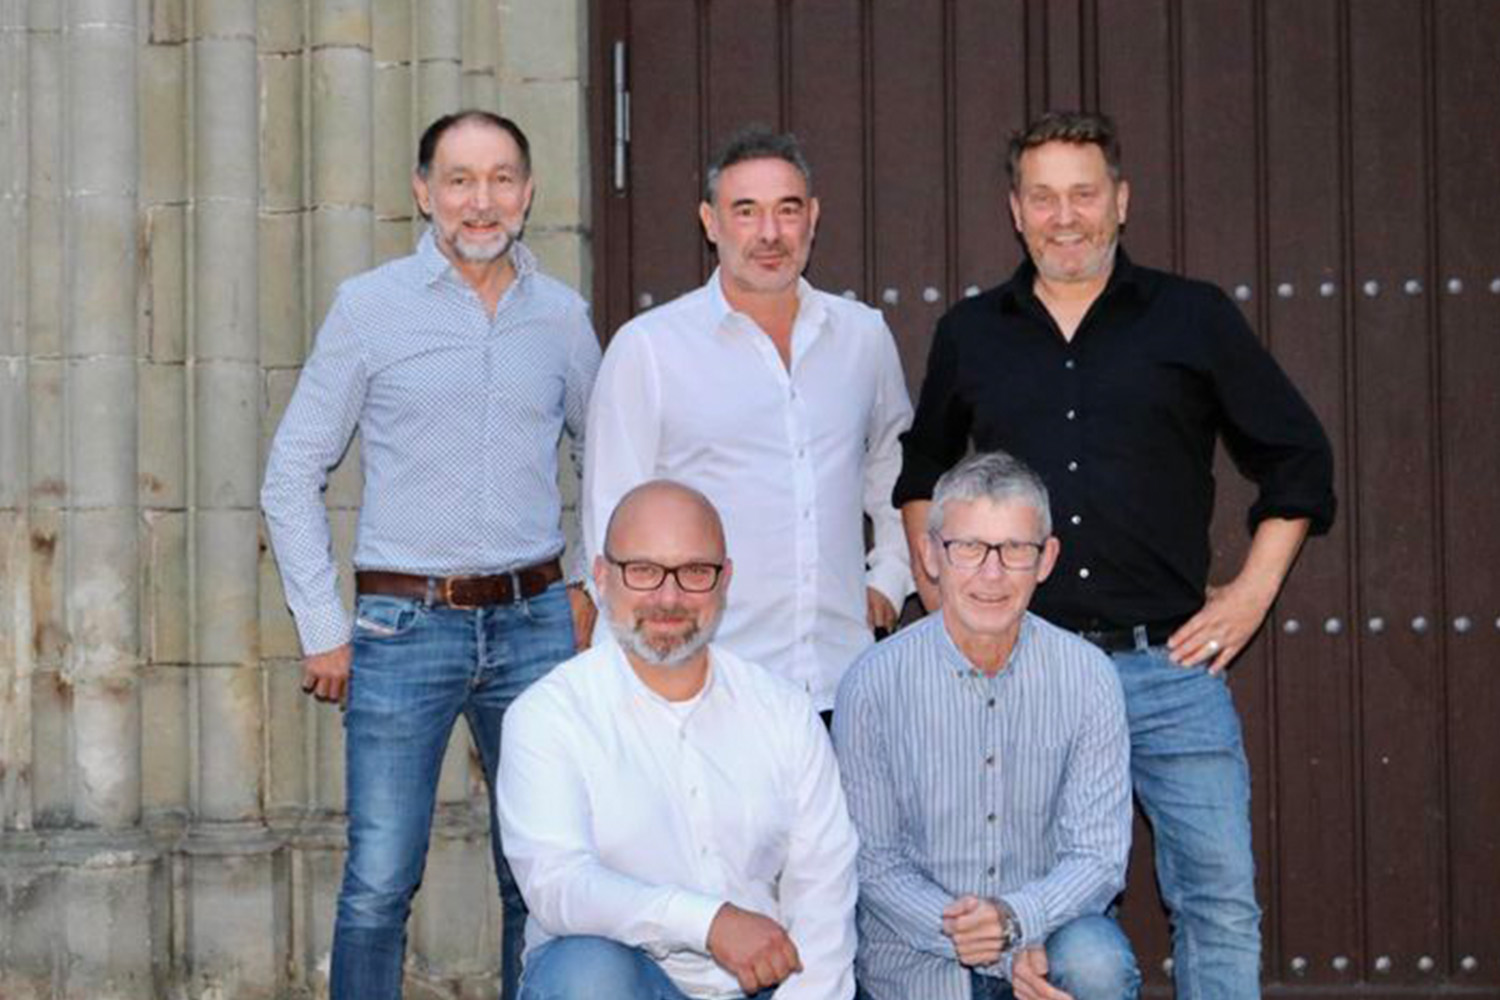 Der Vorstand der Bosnienfreunde Hamm e.V. Oben: Dirk Kassner, Achim Bock, Christian Fecke Unten: Markus Fritsche, Christian Müller